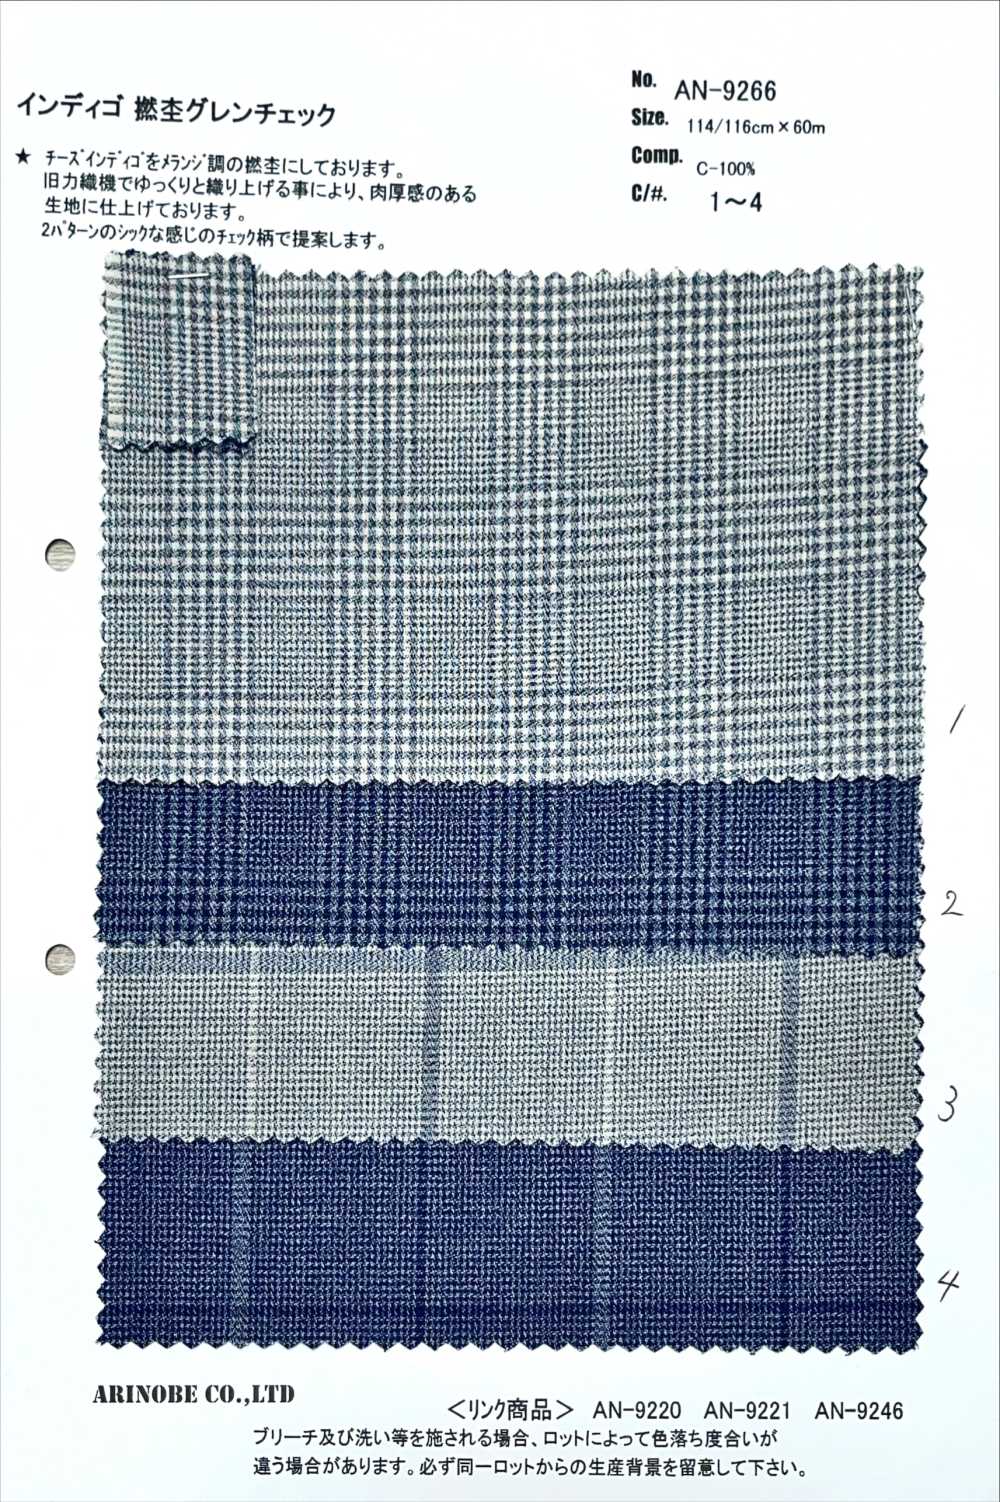 AN-9266 Indigo Twisted Heather Glen Check[Textilgewebe] ARINOBE CO., LTD.